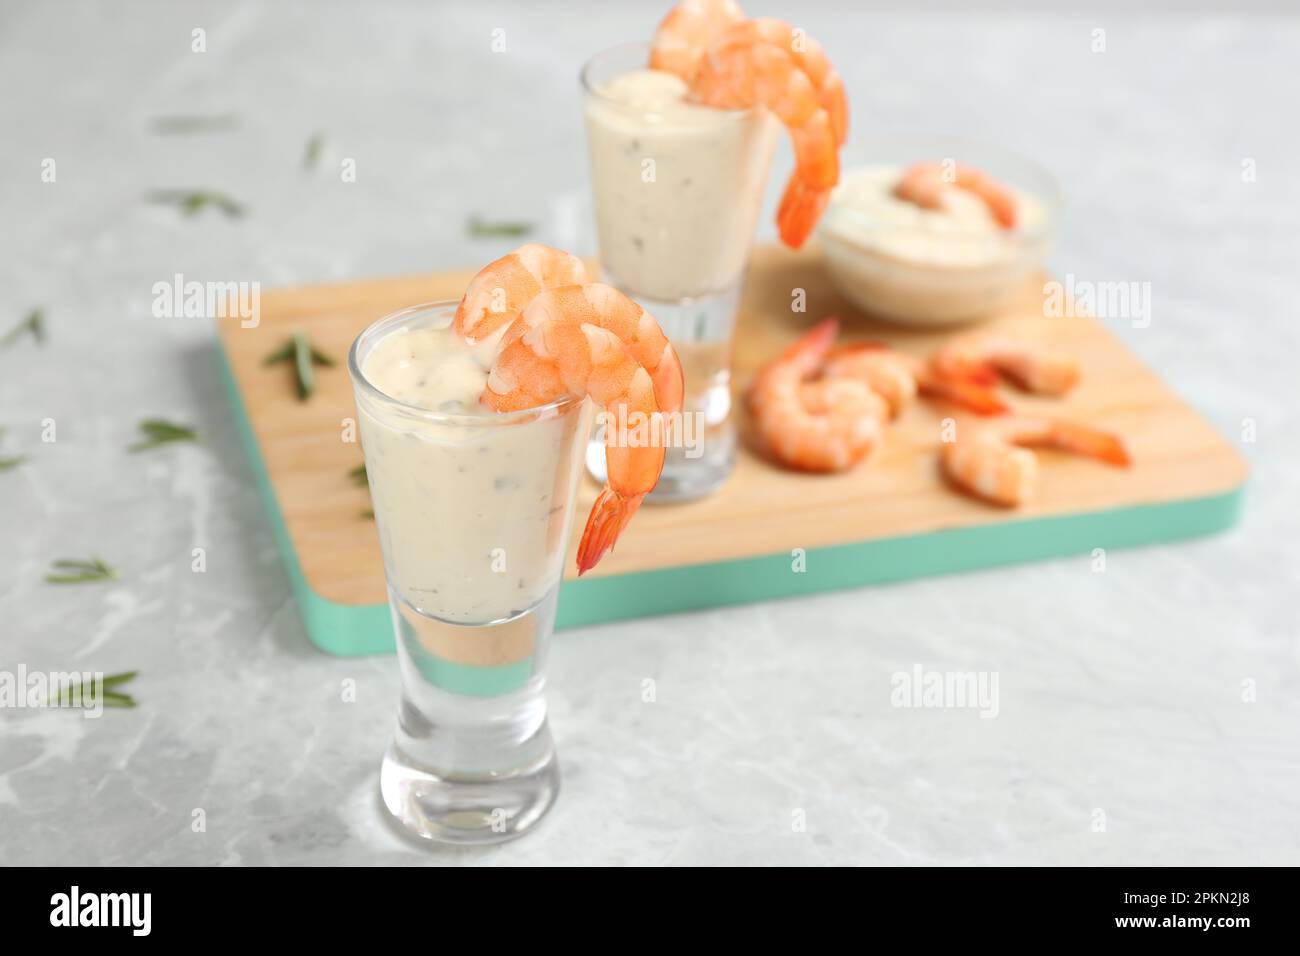 Shrimp cocktail and tartar sauce on marble table Stock Photo